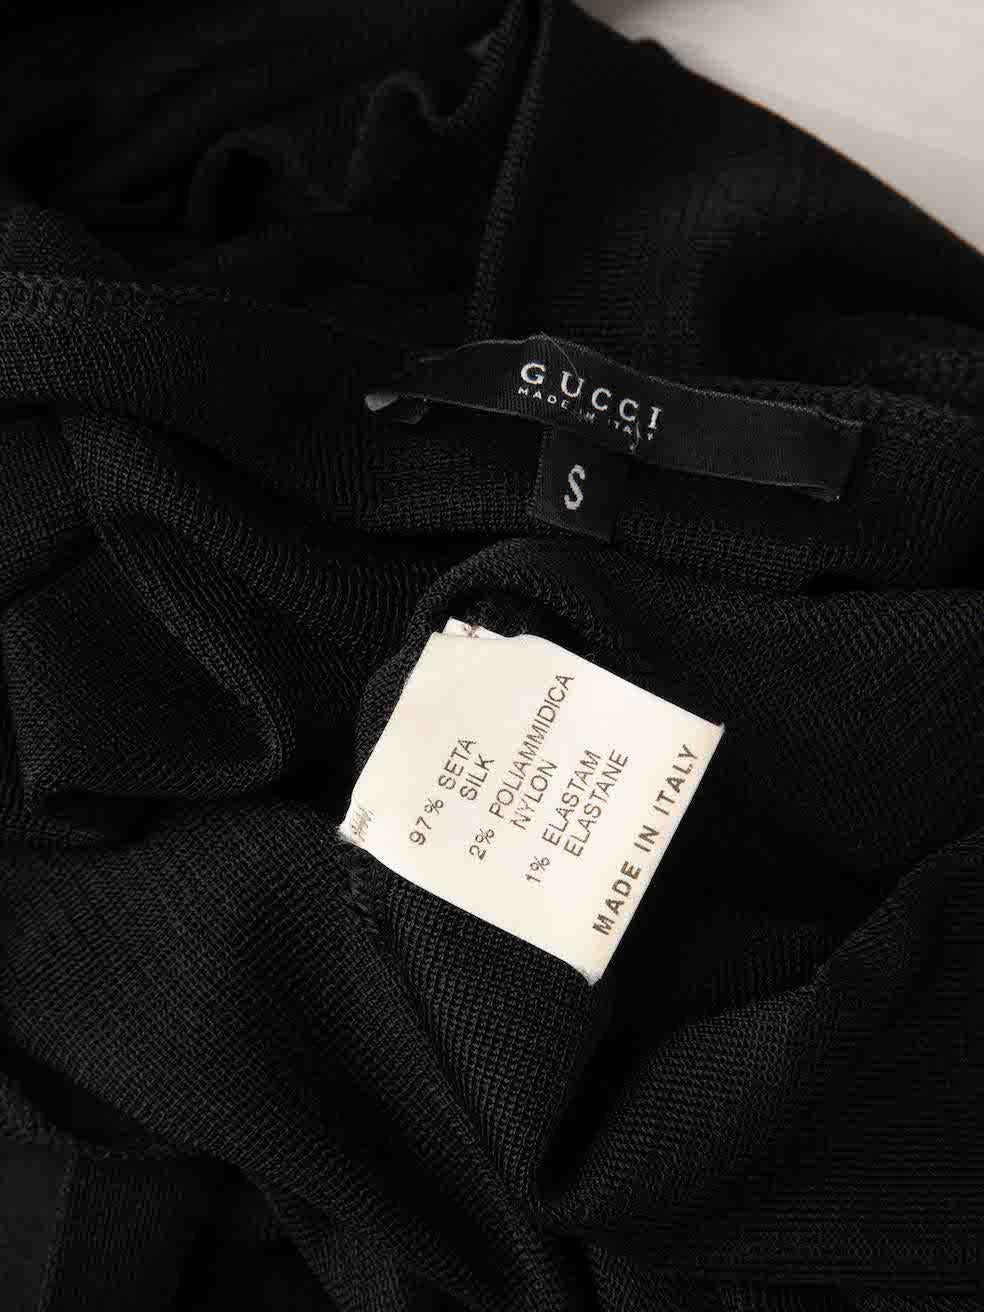 Gucci Black Silk Wrap Around Top Size S For Sale 2